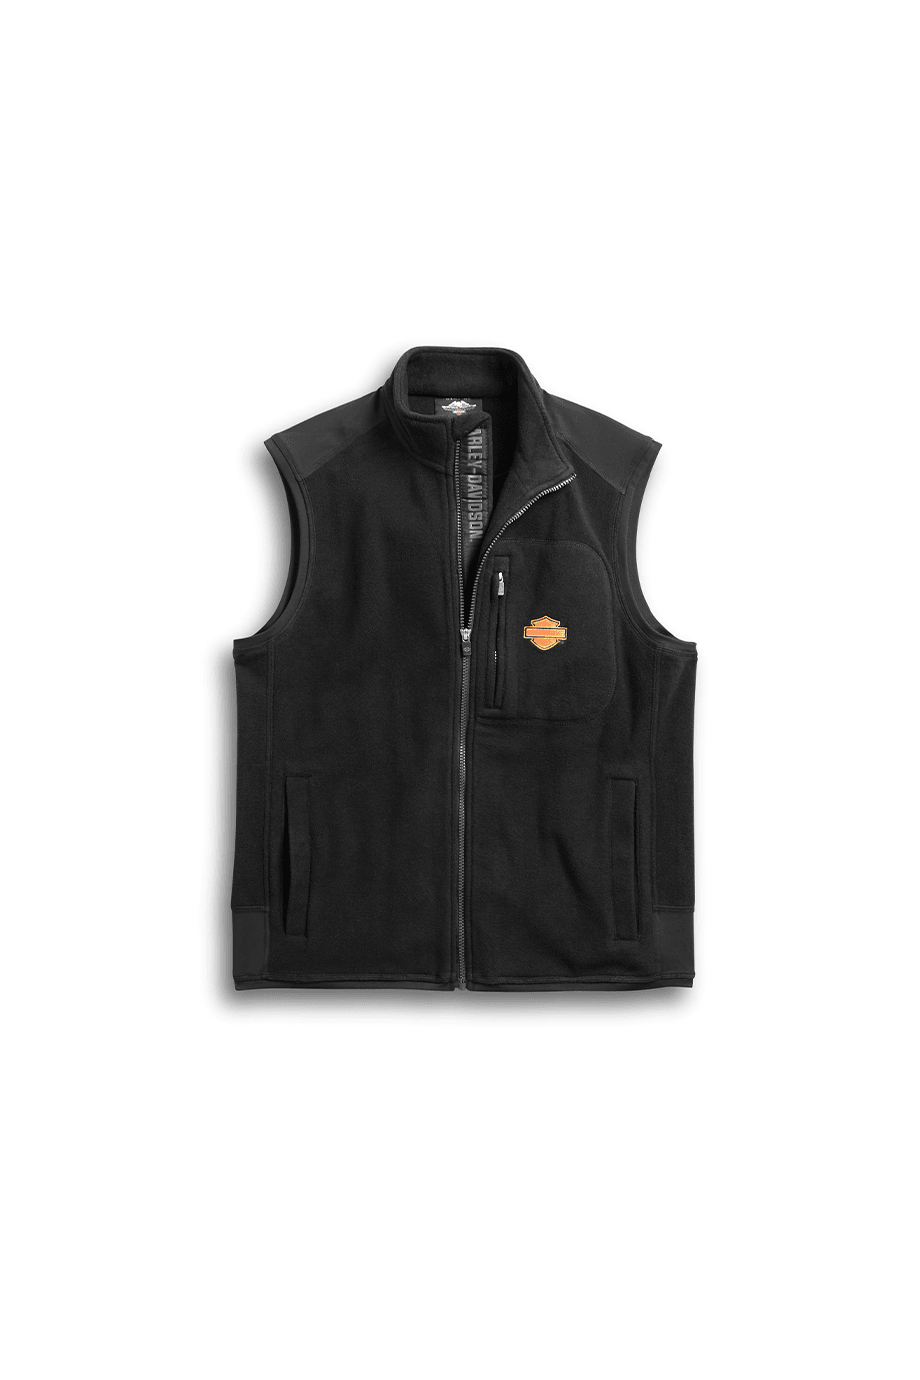 Harley-Davidson® Men's Fleece Vest